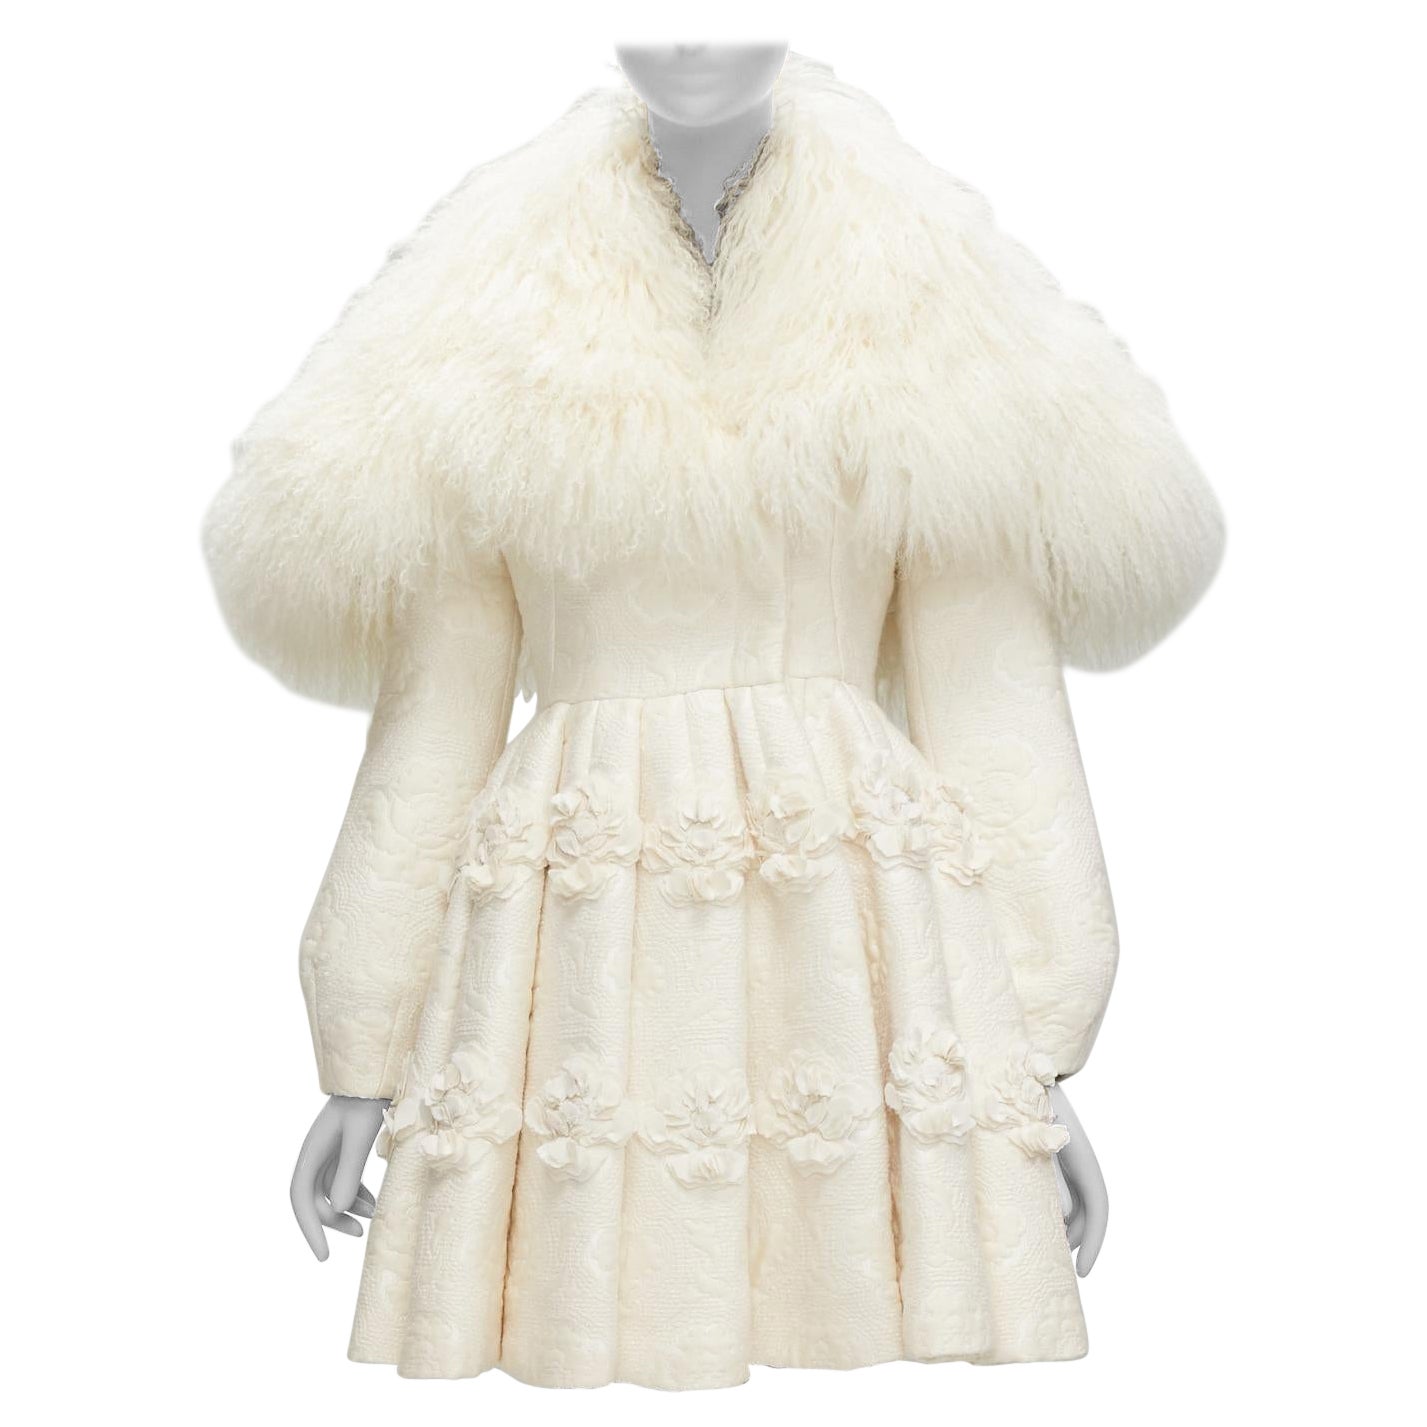 rare ALEXANDER MCQUEEN Sarah Burton 2012 Runway shearling coat dress IT38 XS For Sale